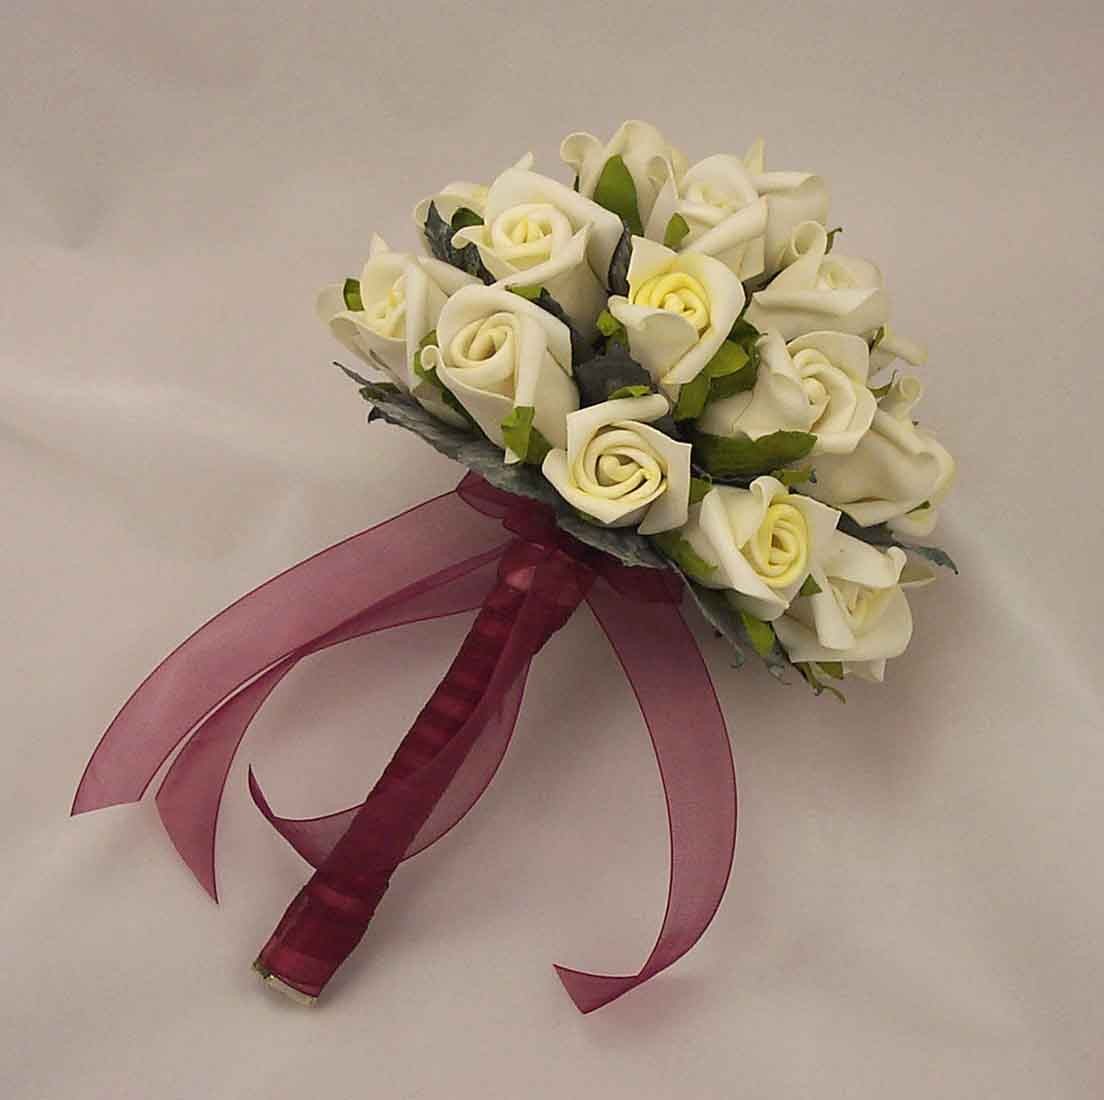 Ivory Rosebud Bridesmaid's Bouquet